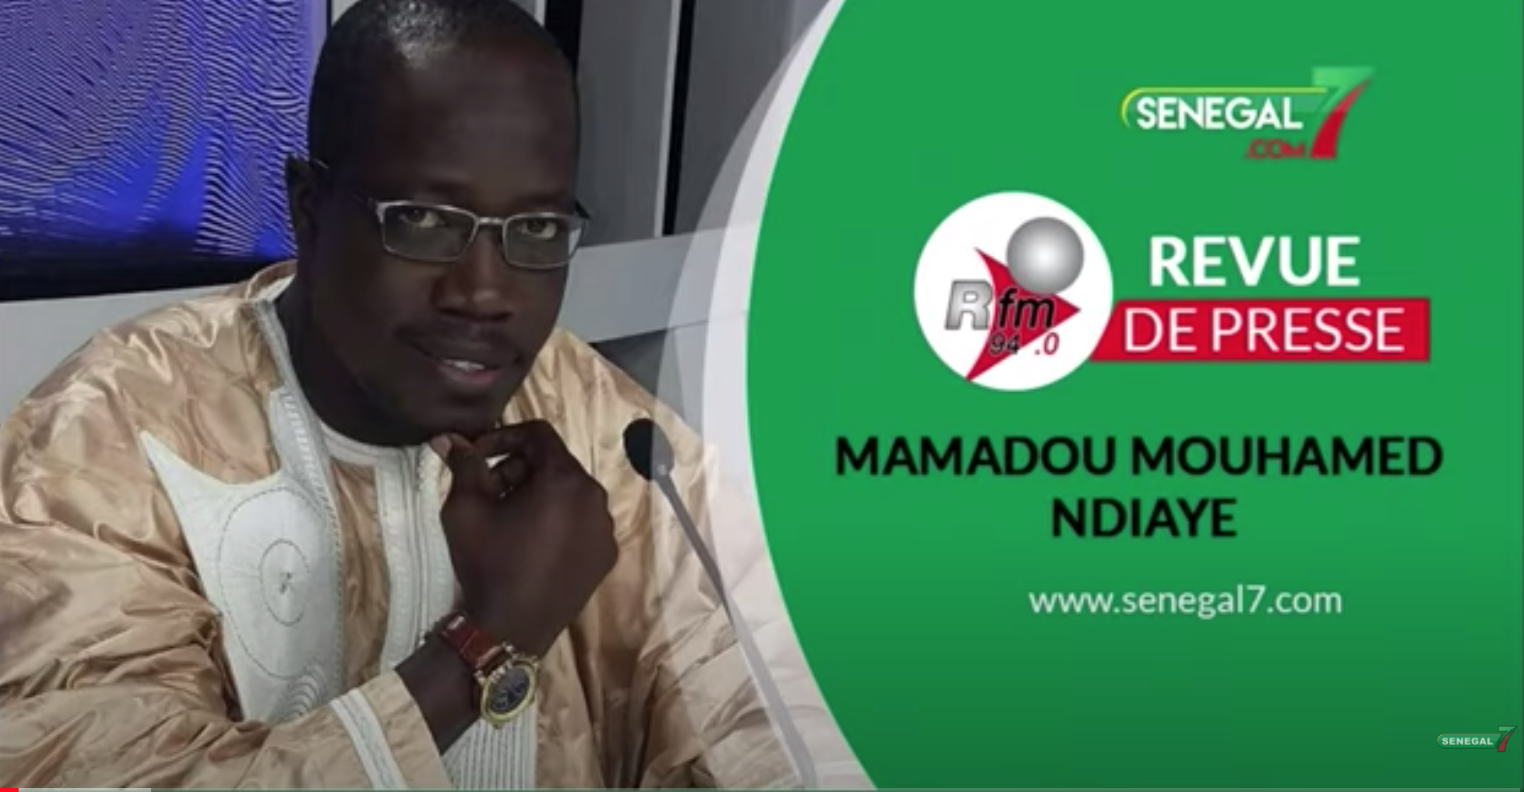 Revue de presse (wolof) Rfm du Mardi 17 Aout 2021 avec Mamadou Mouhamed Ndiaye